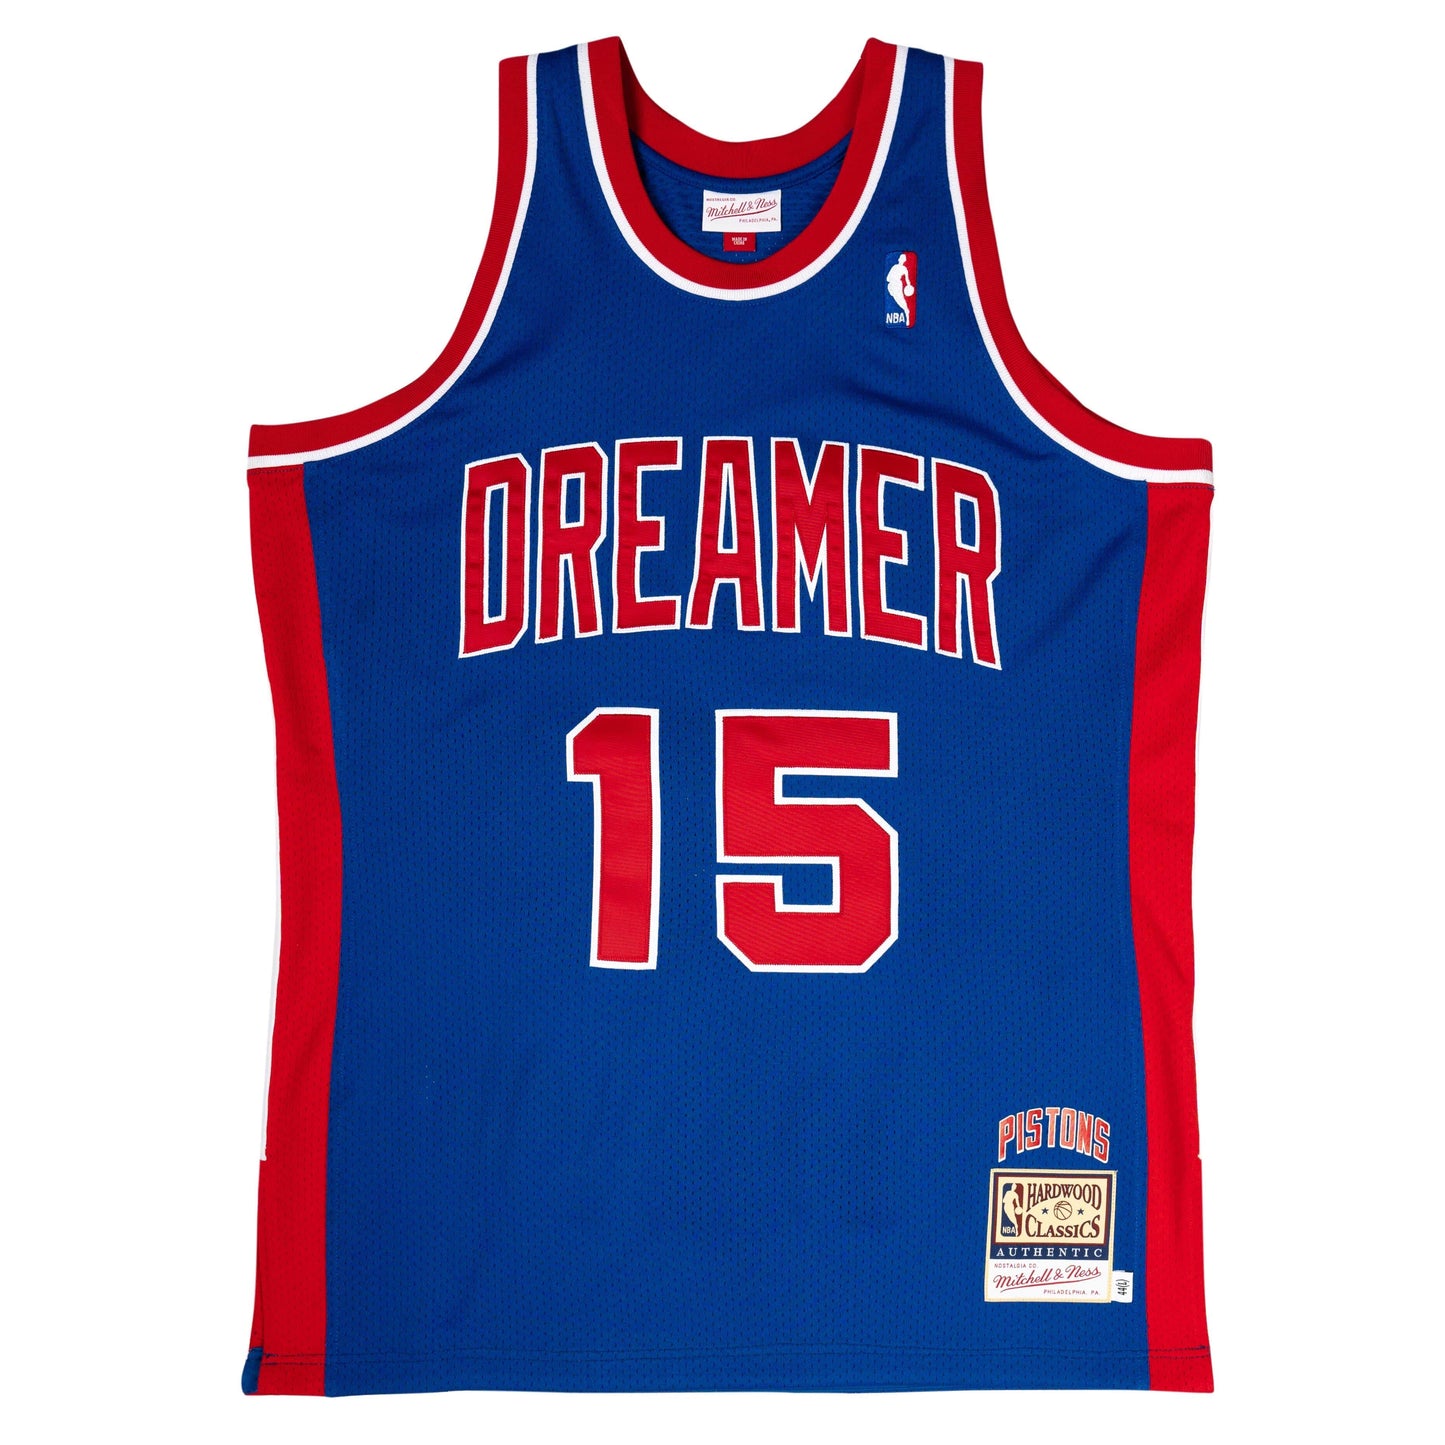 DREAMER x Mitchell &amp; Ness Detroit Pistons Jersey